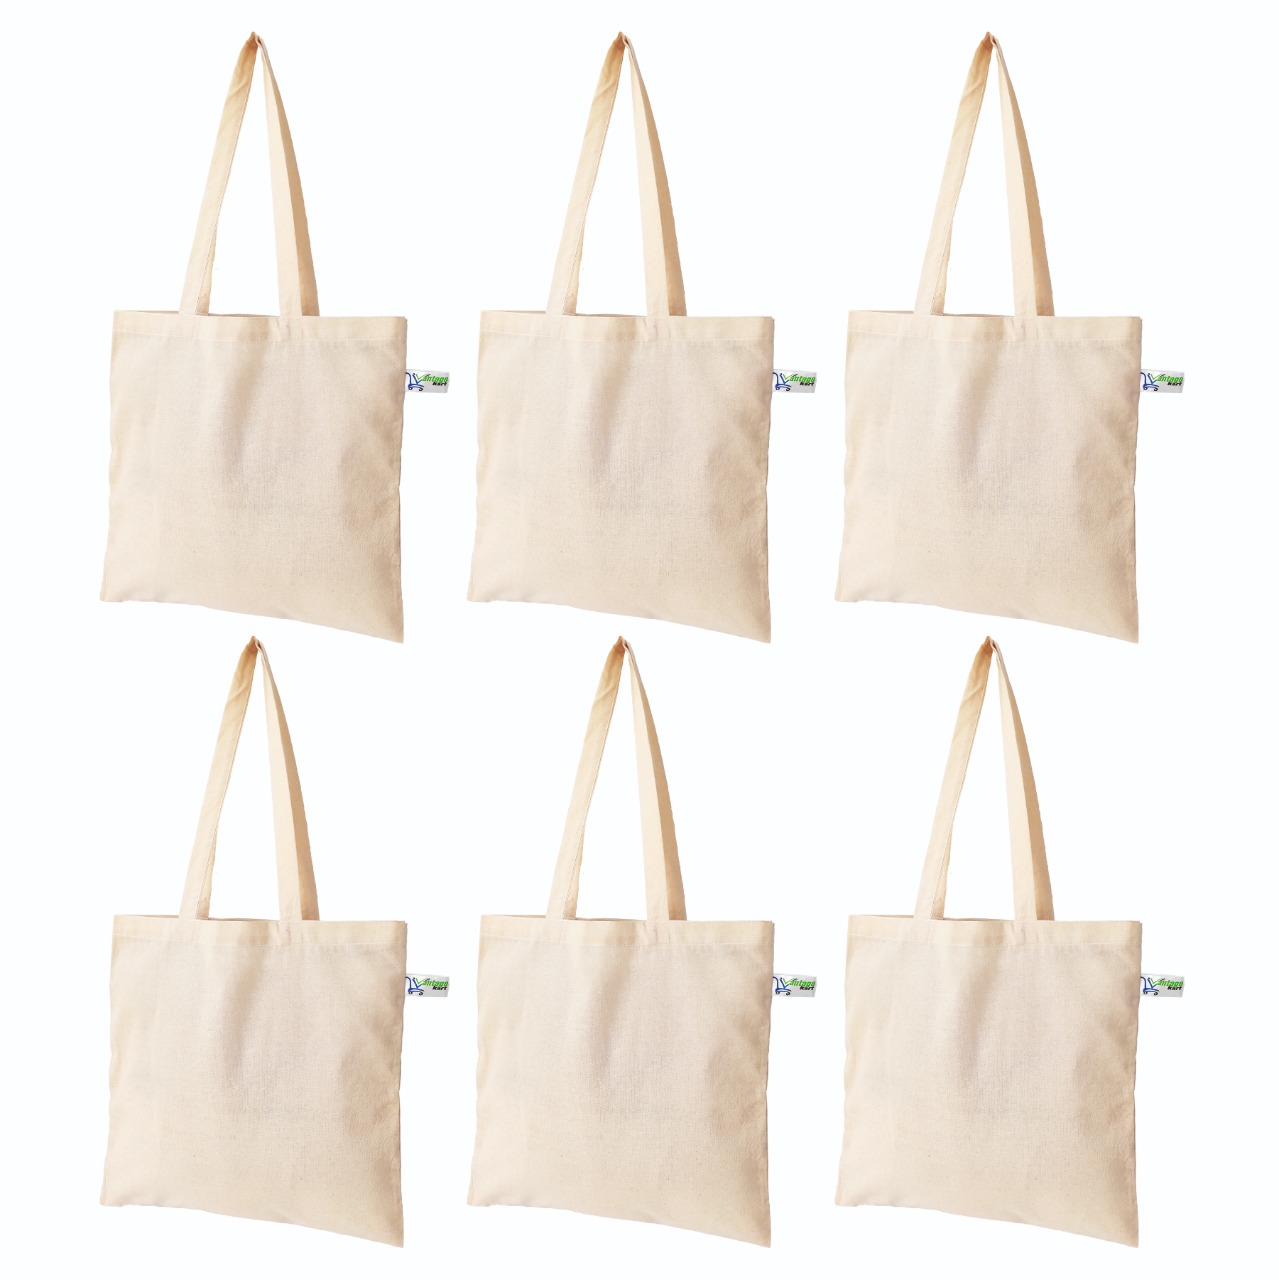 Buy Shopping bags Online - Shop at VantageKart